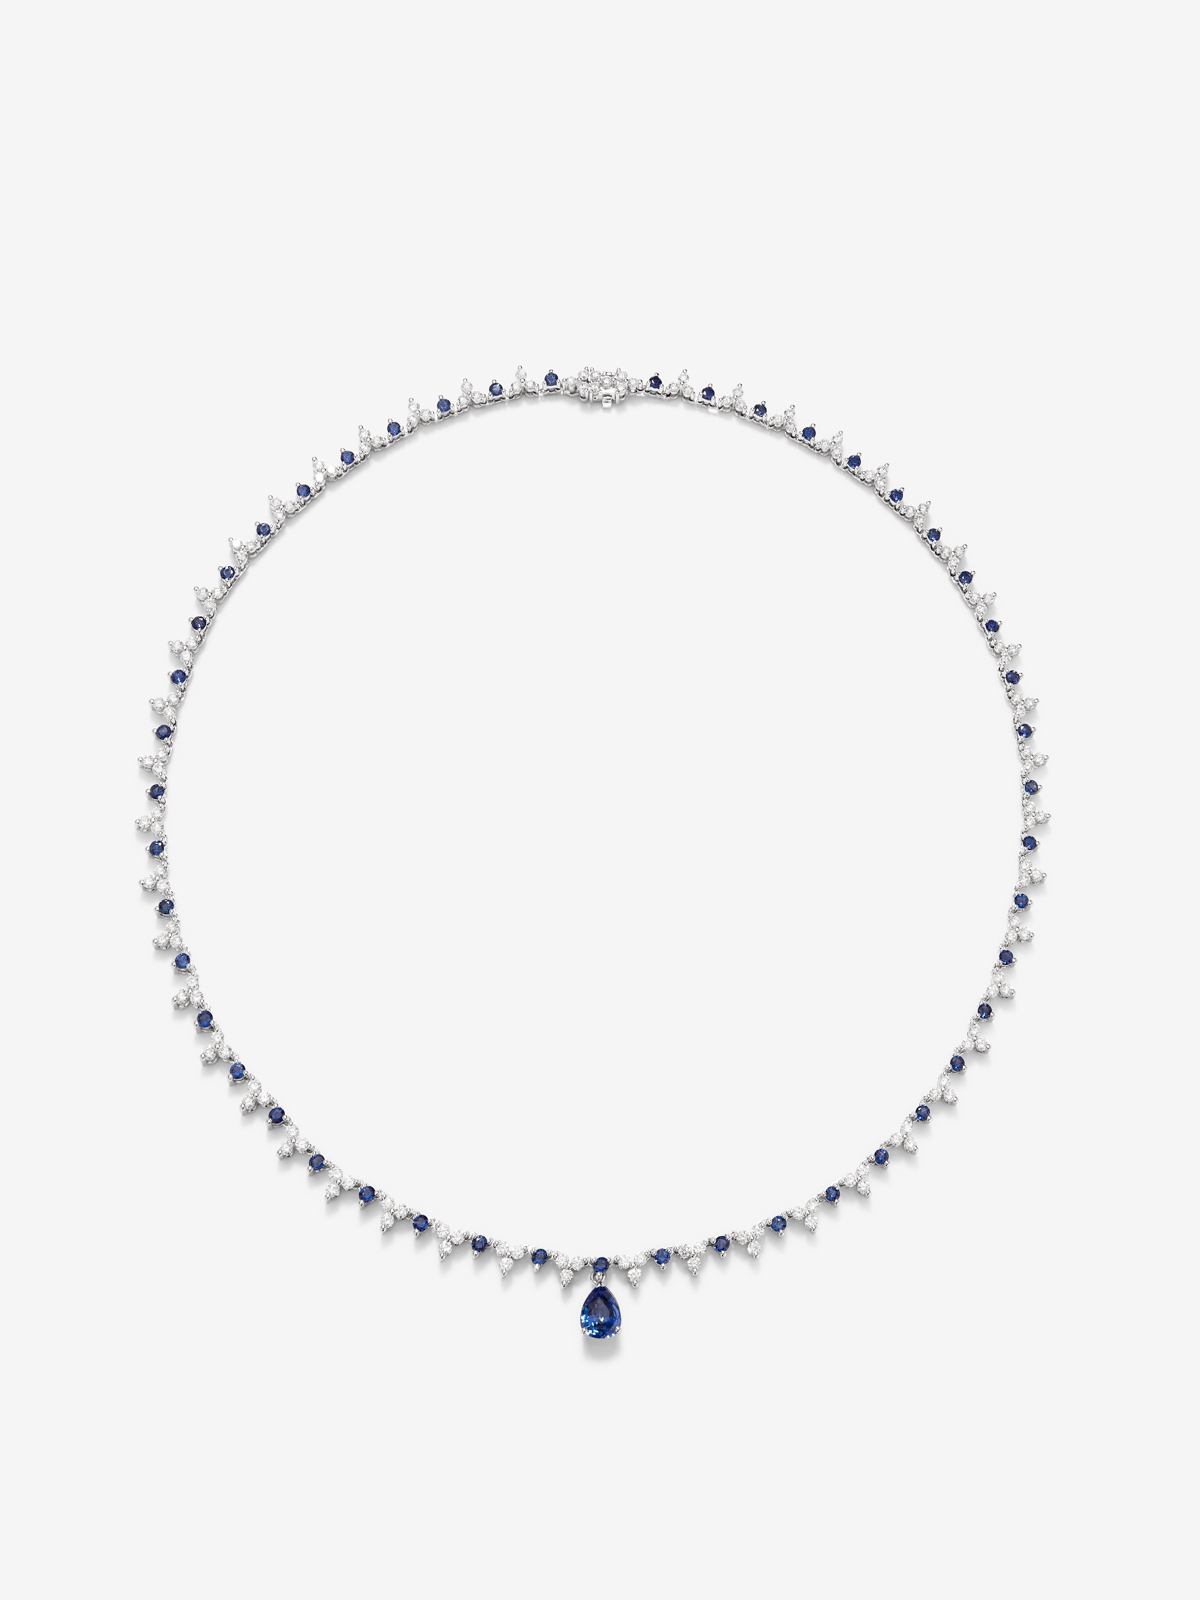 Collar de oro blanco de 18K con zafiro azul royal en talla pera de 1,25 cts, zafiros azules en talla brillante de 2,96 y diamantes blancos en talla brillante de 4,27 cts